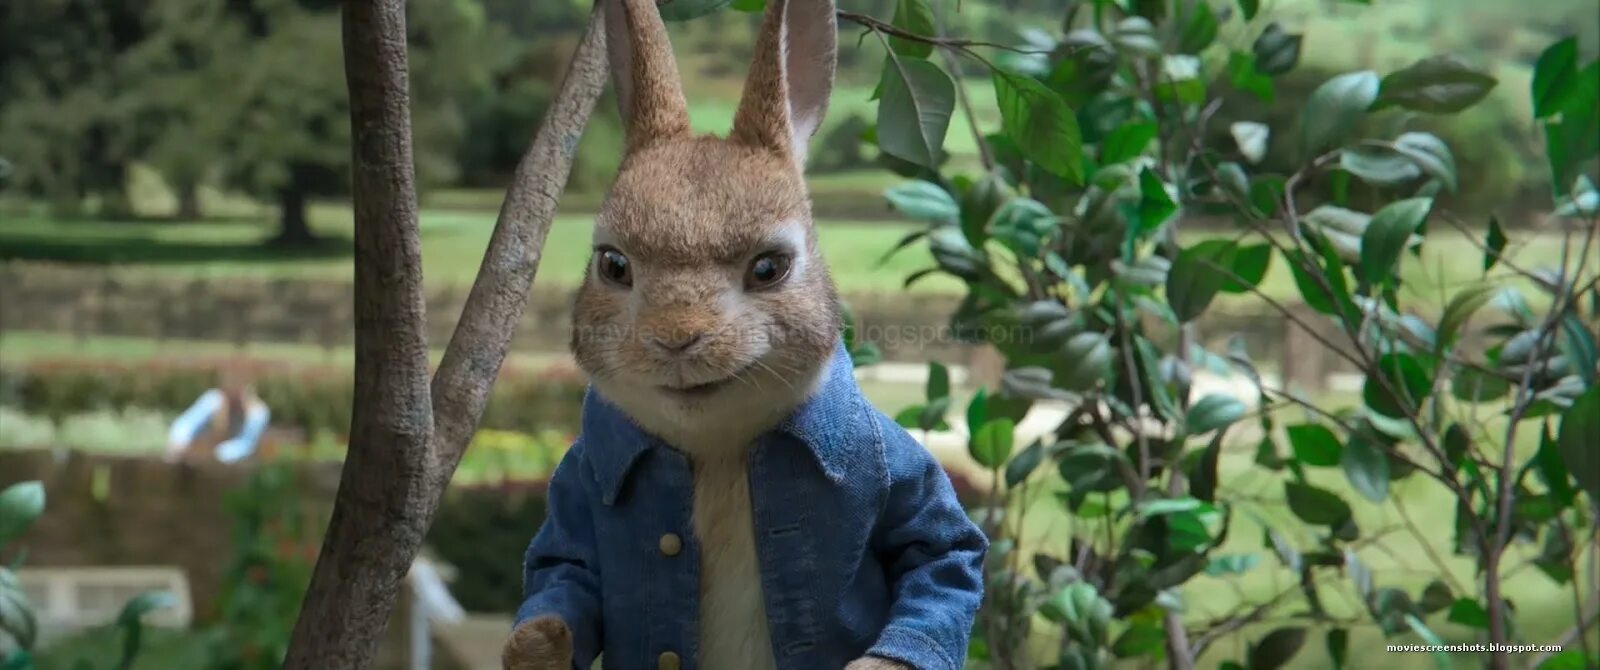 Rabbit movie. Peter Rabbit (2018).